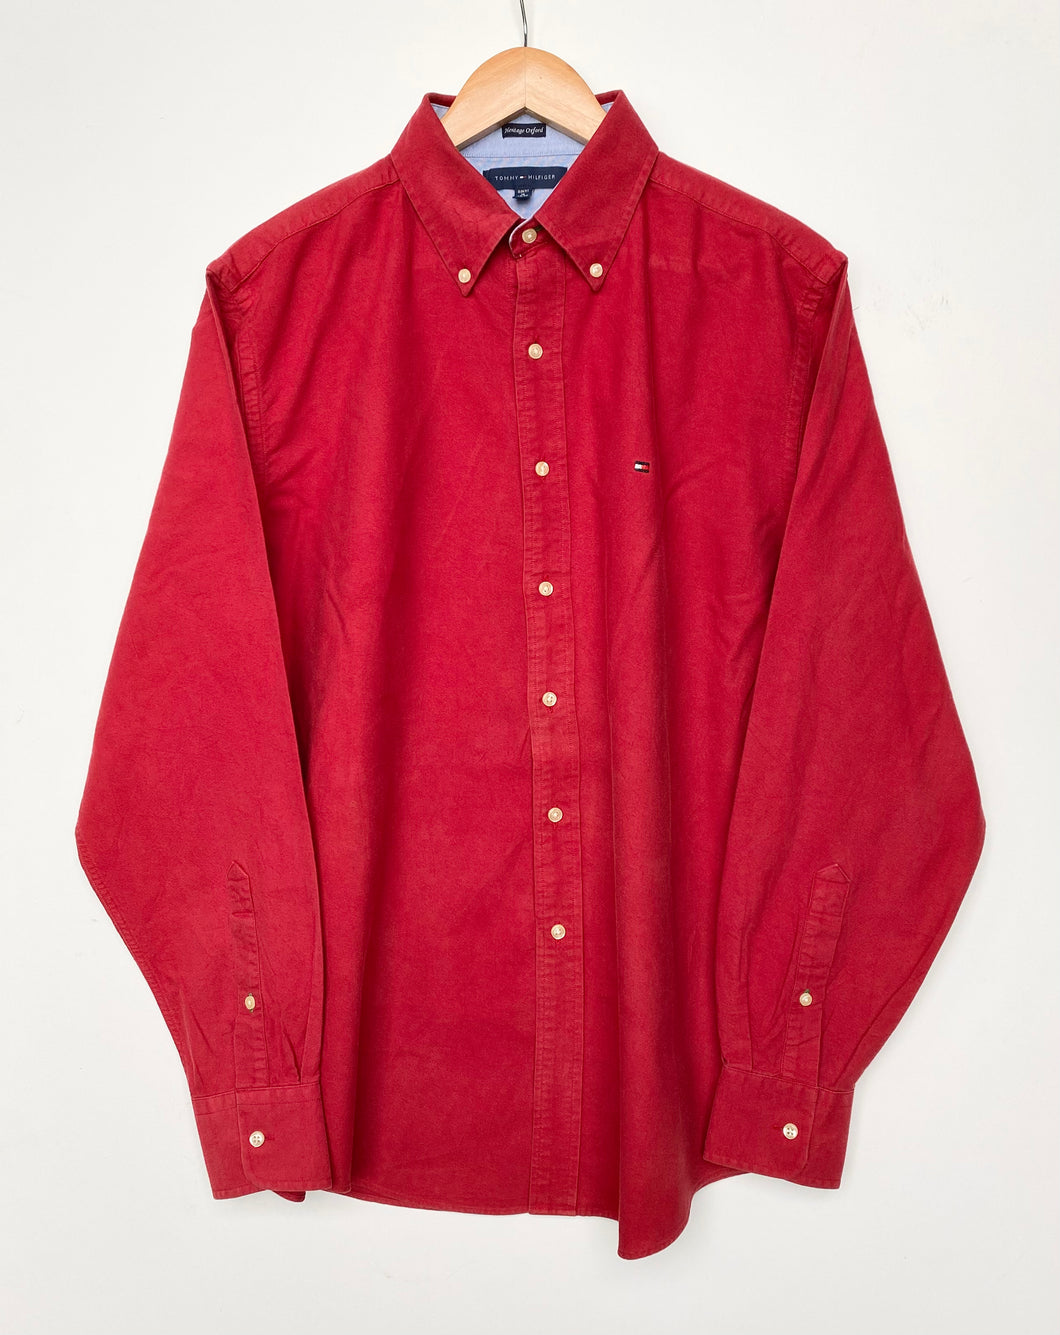 Tommy Hilfiger shirt Red (M)